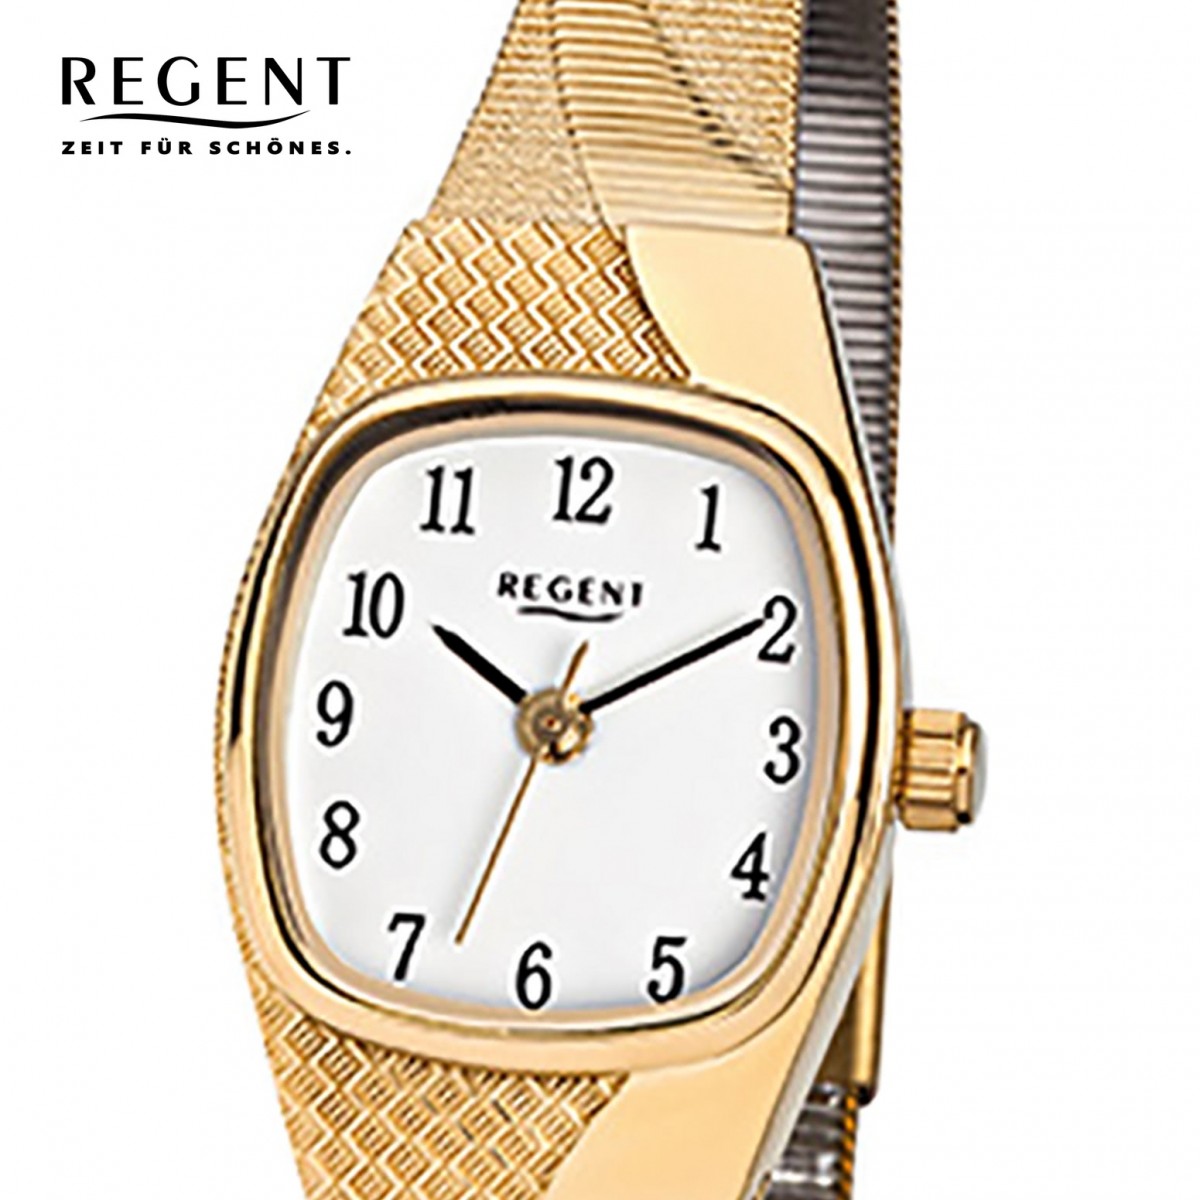 Metallarmband - Quarzwerk - Damen-Uhr Regent - Edelstahl gold URF624